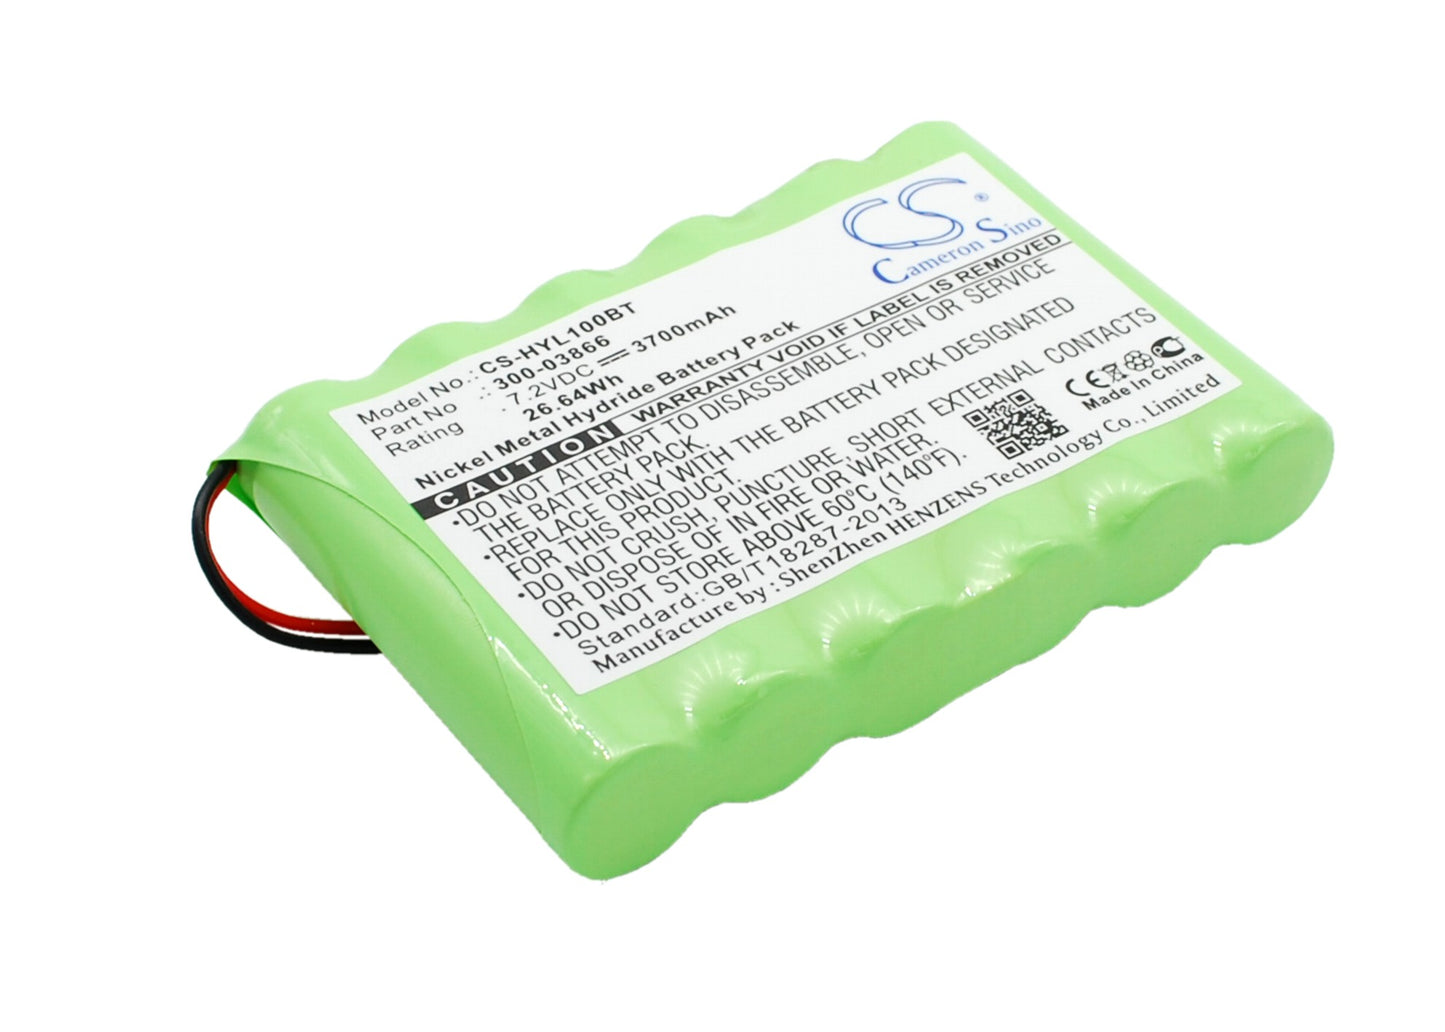 3700mAh 300-03866, 300-03864-1 High Capacity Battery for Honeywell LYNX Touch L5100-SMAVtronics